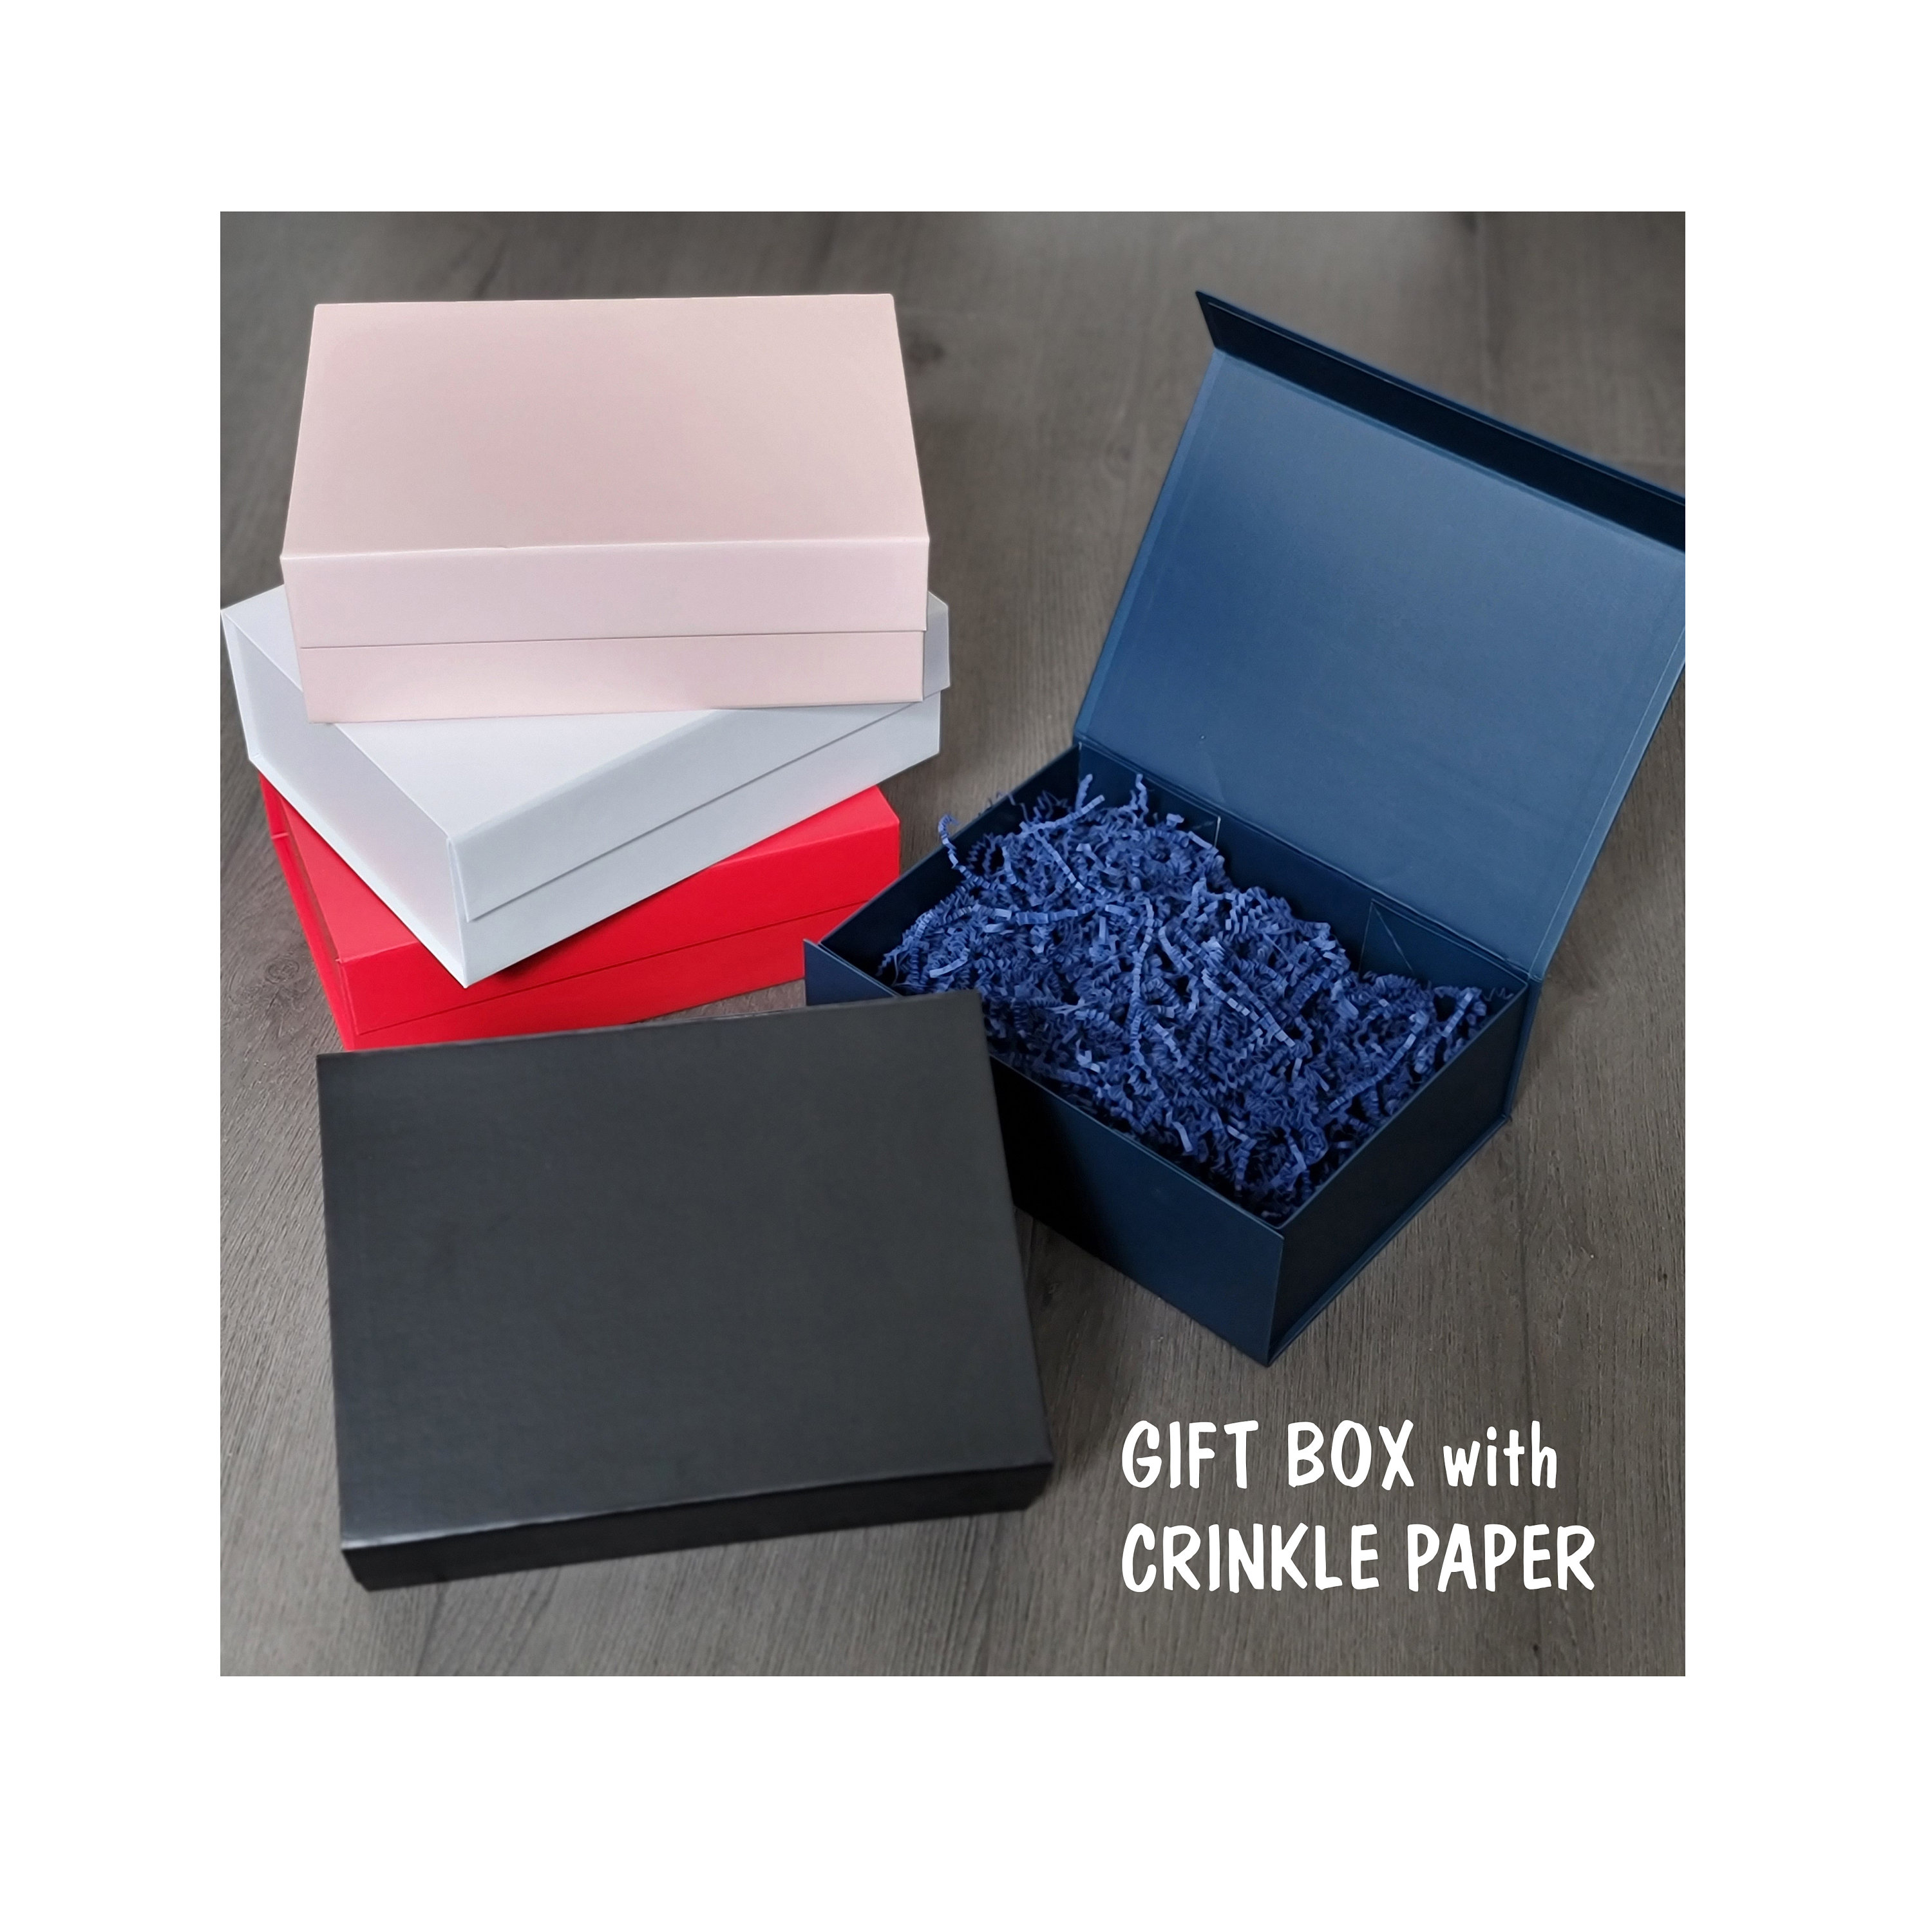 Wholesale BENECREAT 10PCS Clear Wedding Favour Boxes 6x6x6 Square PVC  Transparent Gift Boxes for Candy Chocolate Valentine 